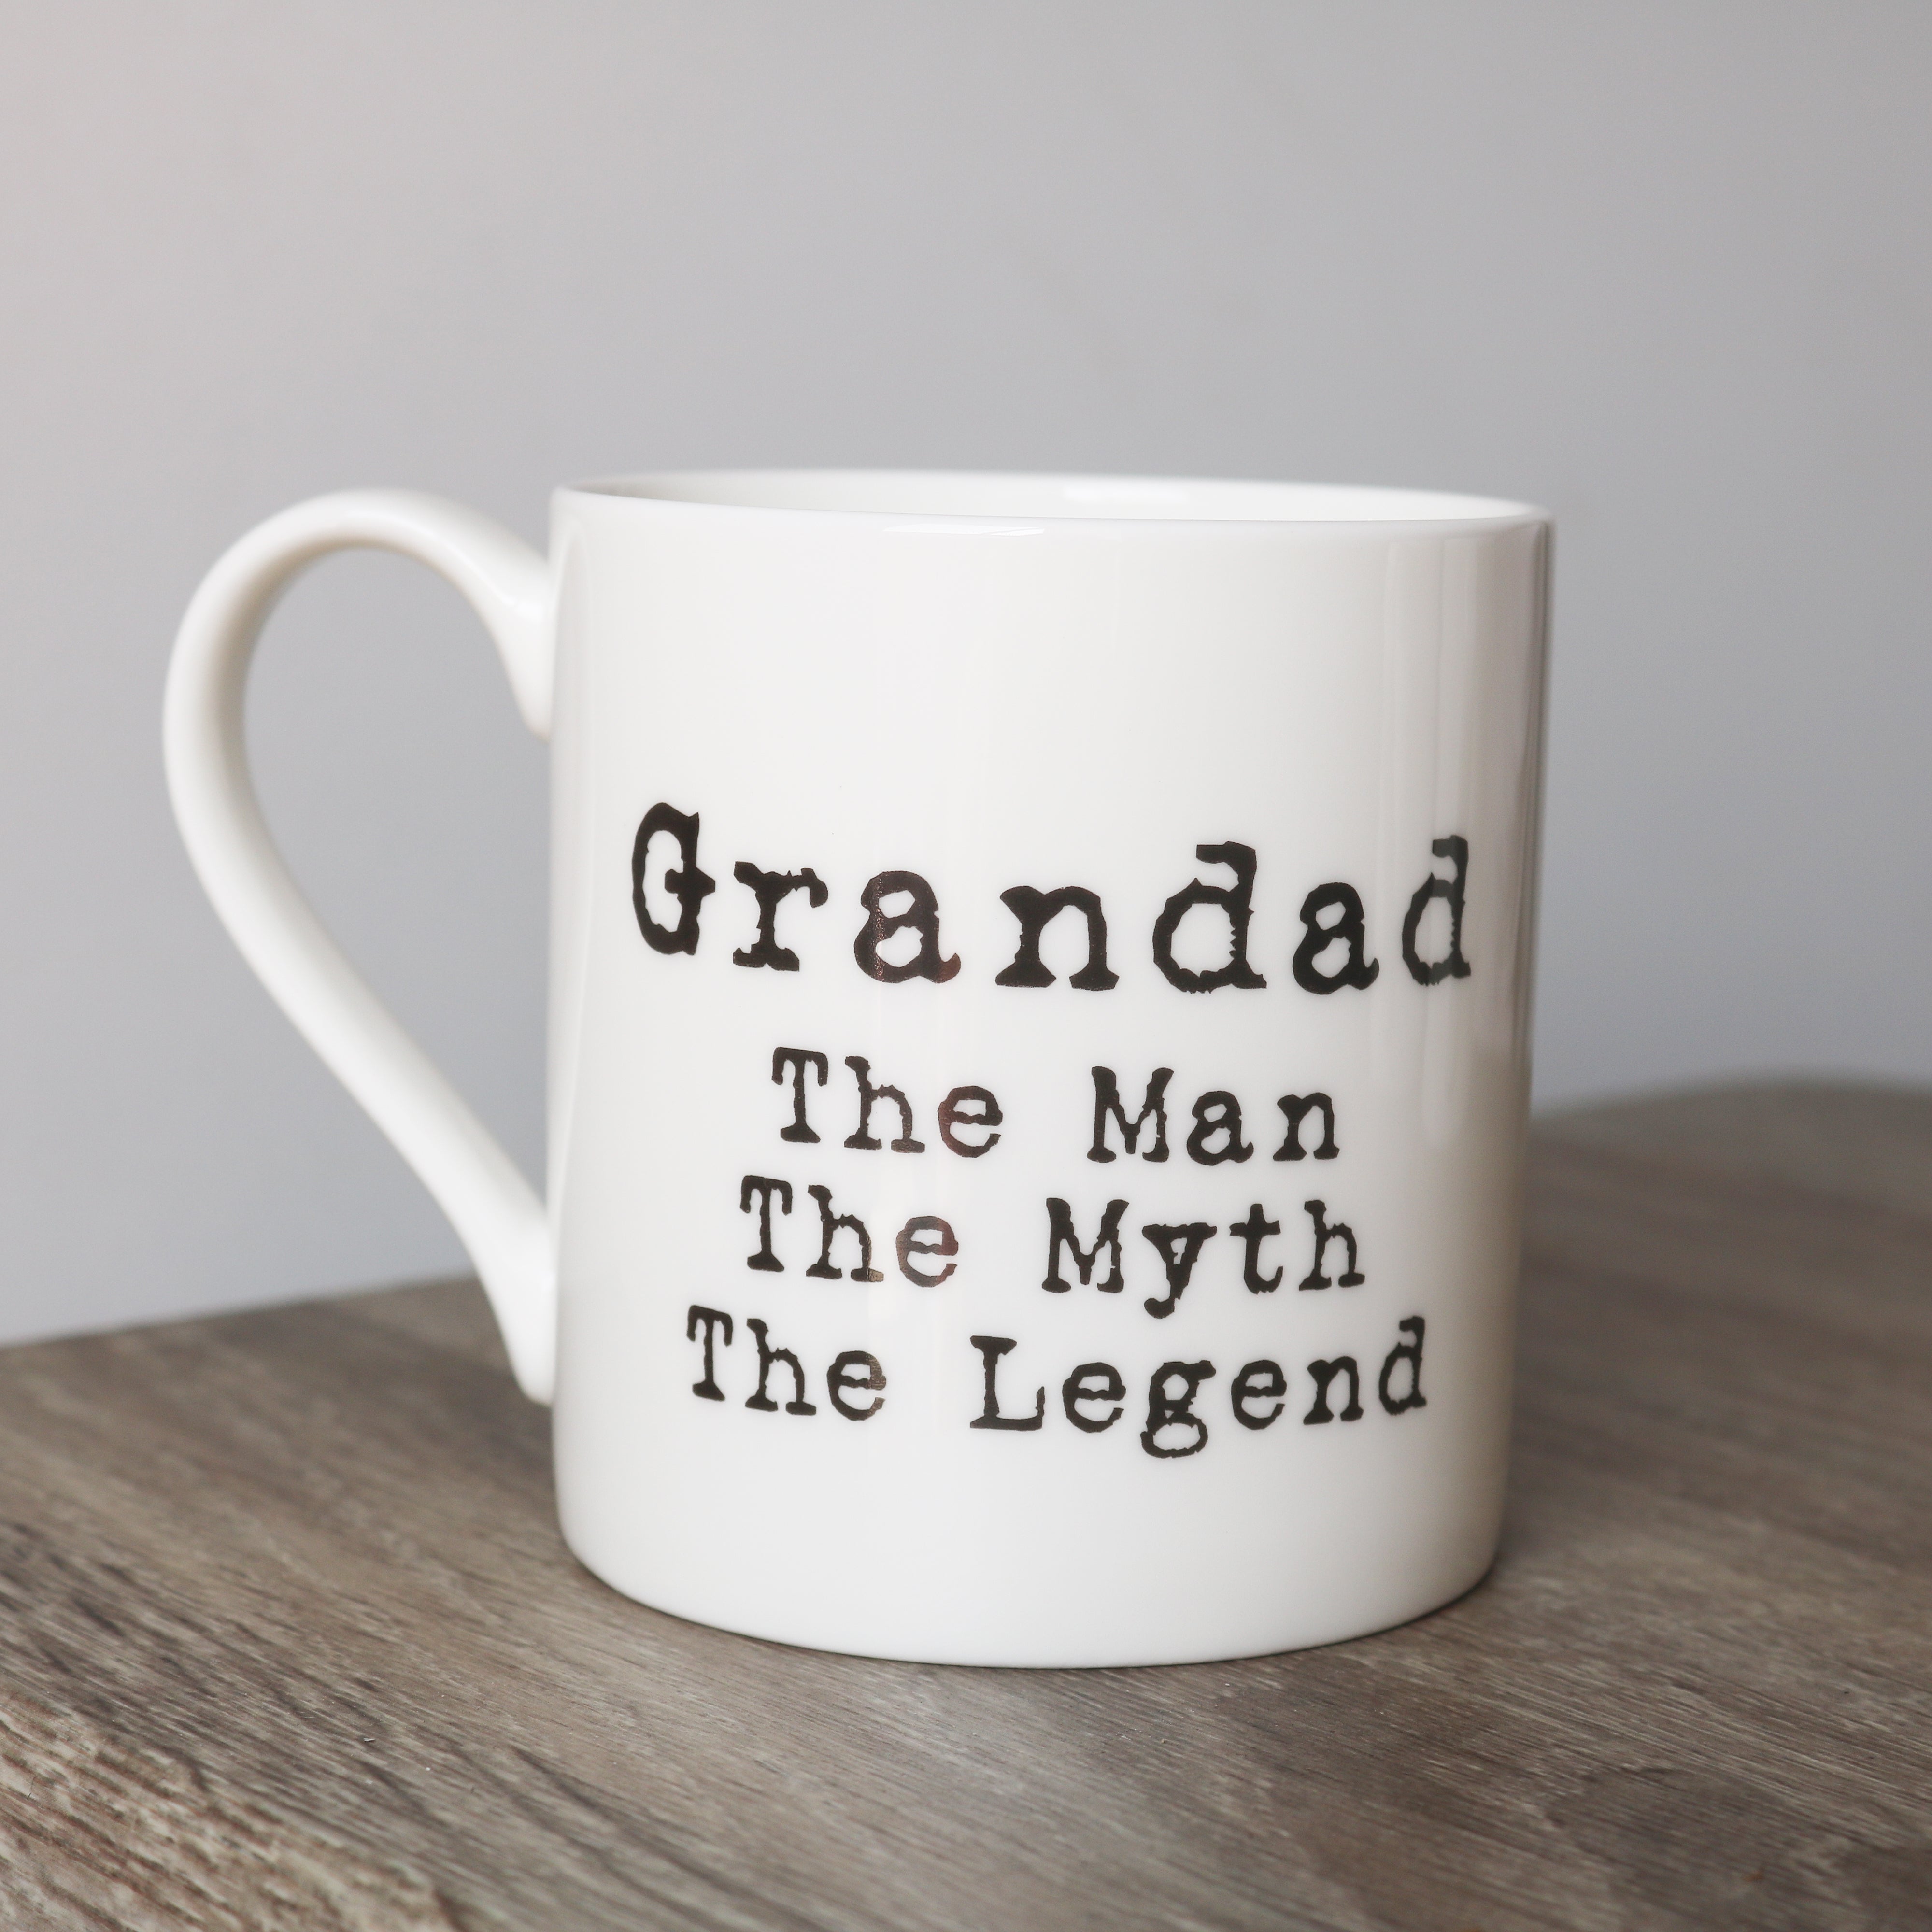 Grandad - The Man, The Myth, The Legend